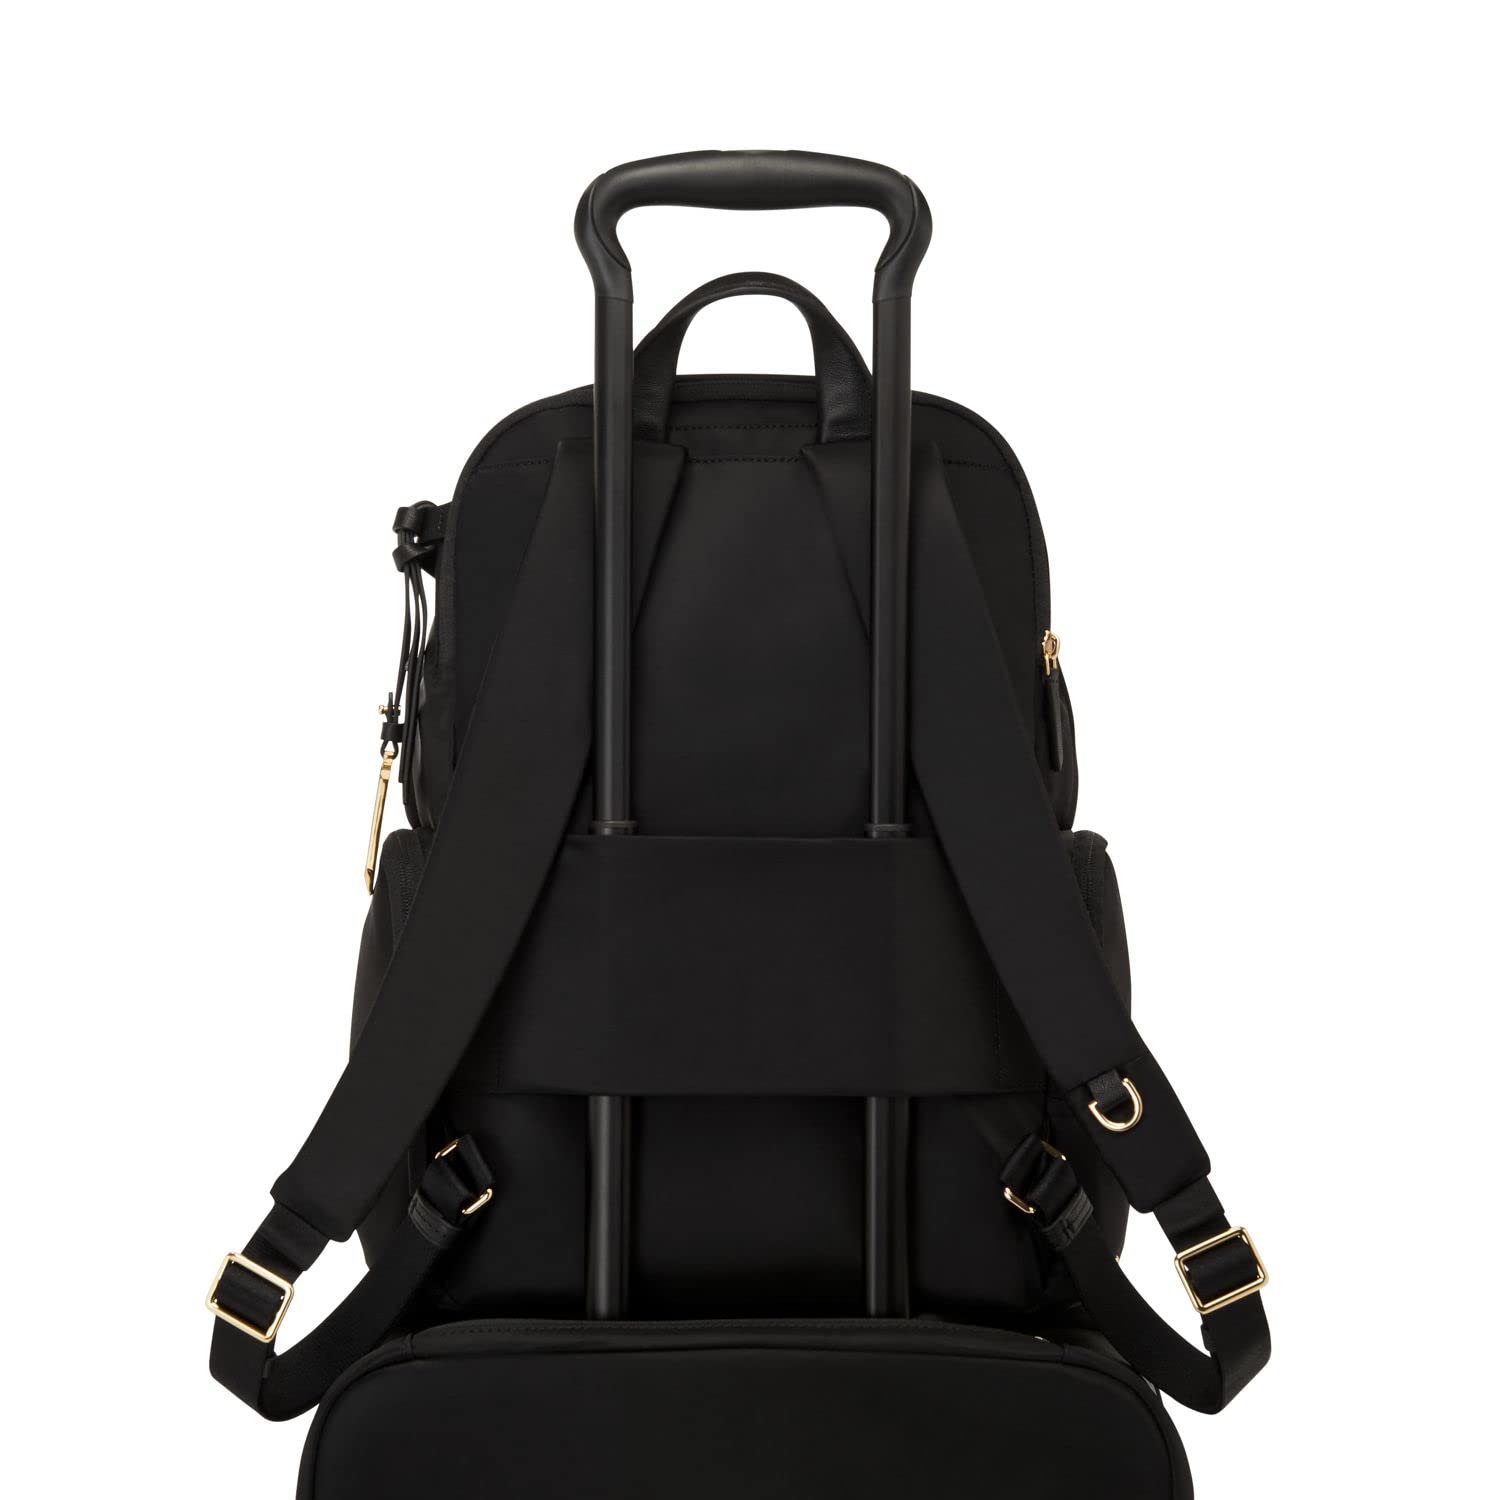 TUMI Voyageur Celina Backpack - Men's & Women's Backpack - Travel Bag - Indigo - Gold Hardware - 16.0